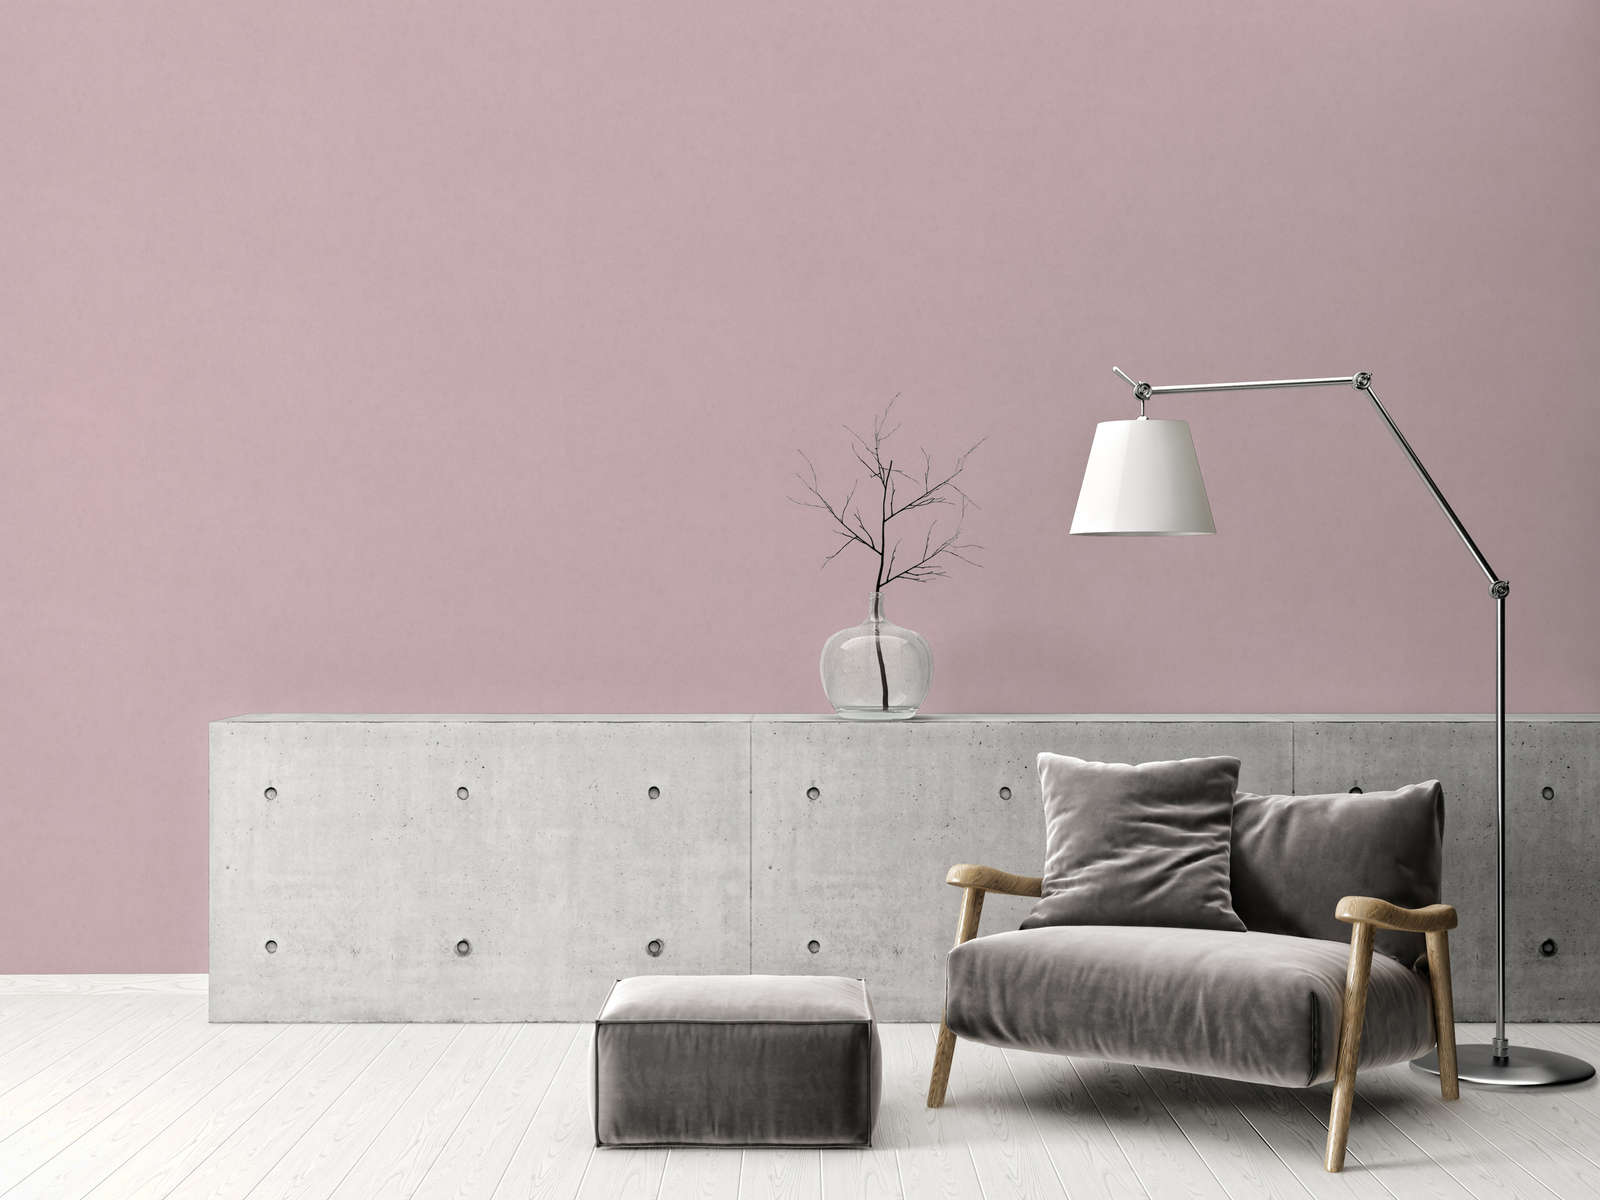             Plain non-woven wallpaper - purple
        